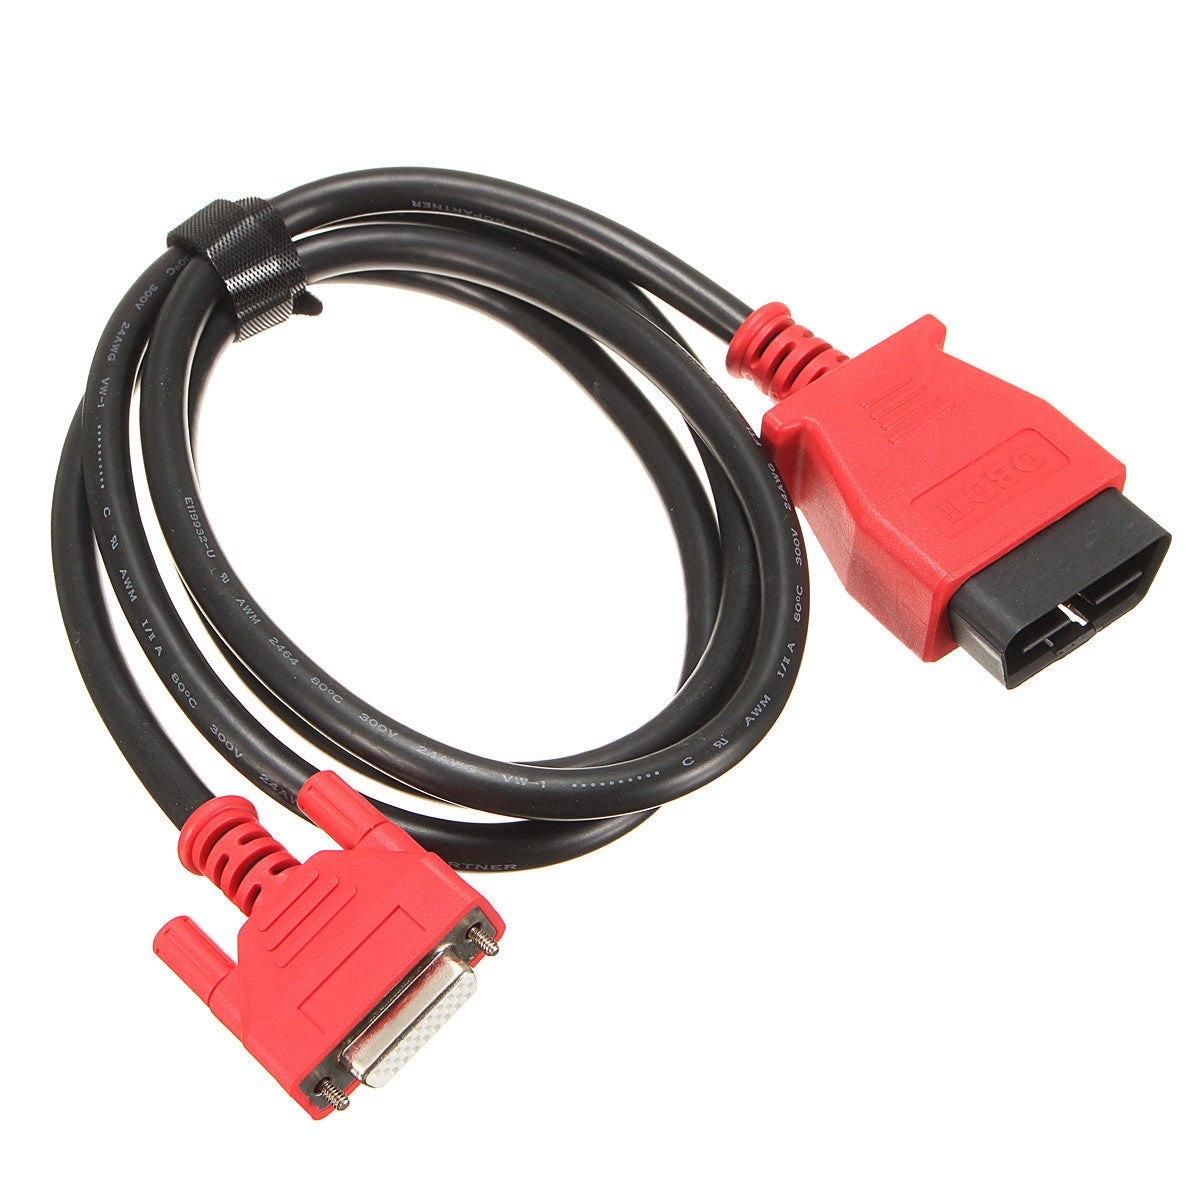 Car OBD2 Main Test Cable Data Wire Cord For Autel MaxiSYS Pro MS908P - Auto GoShop